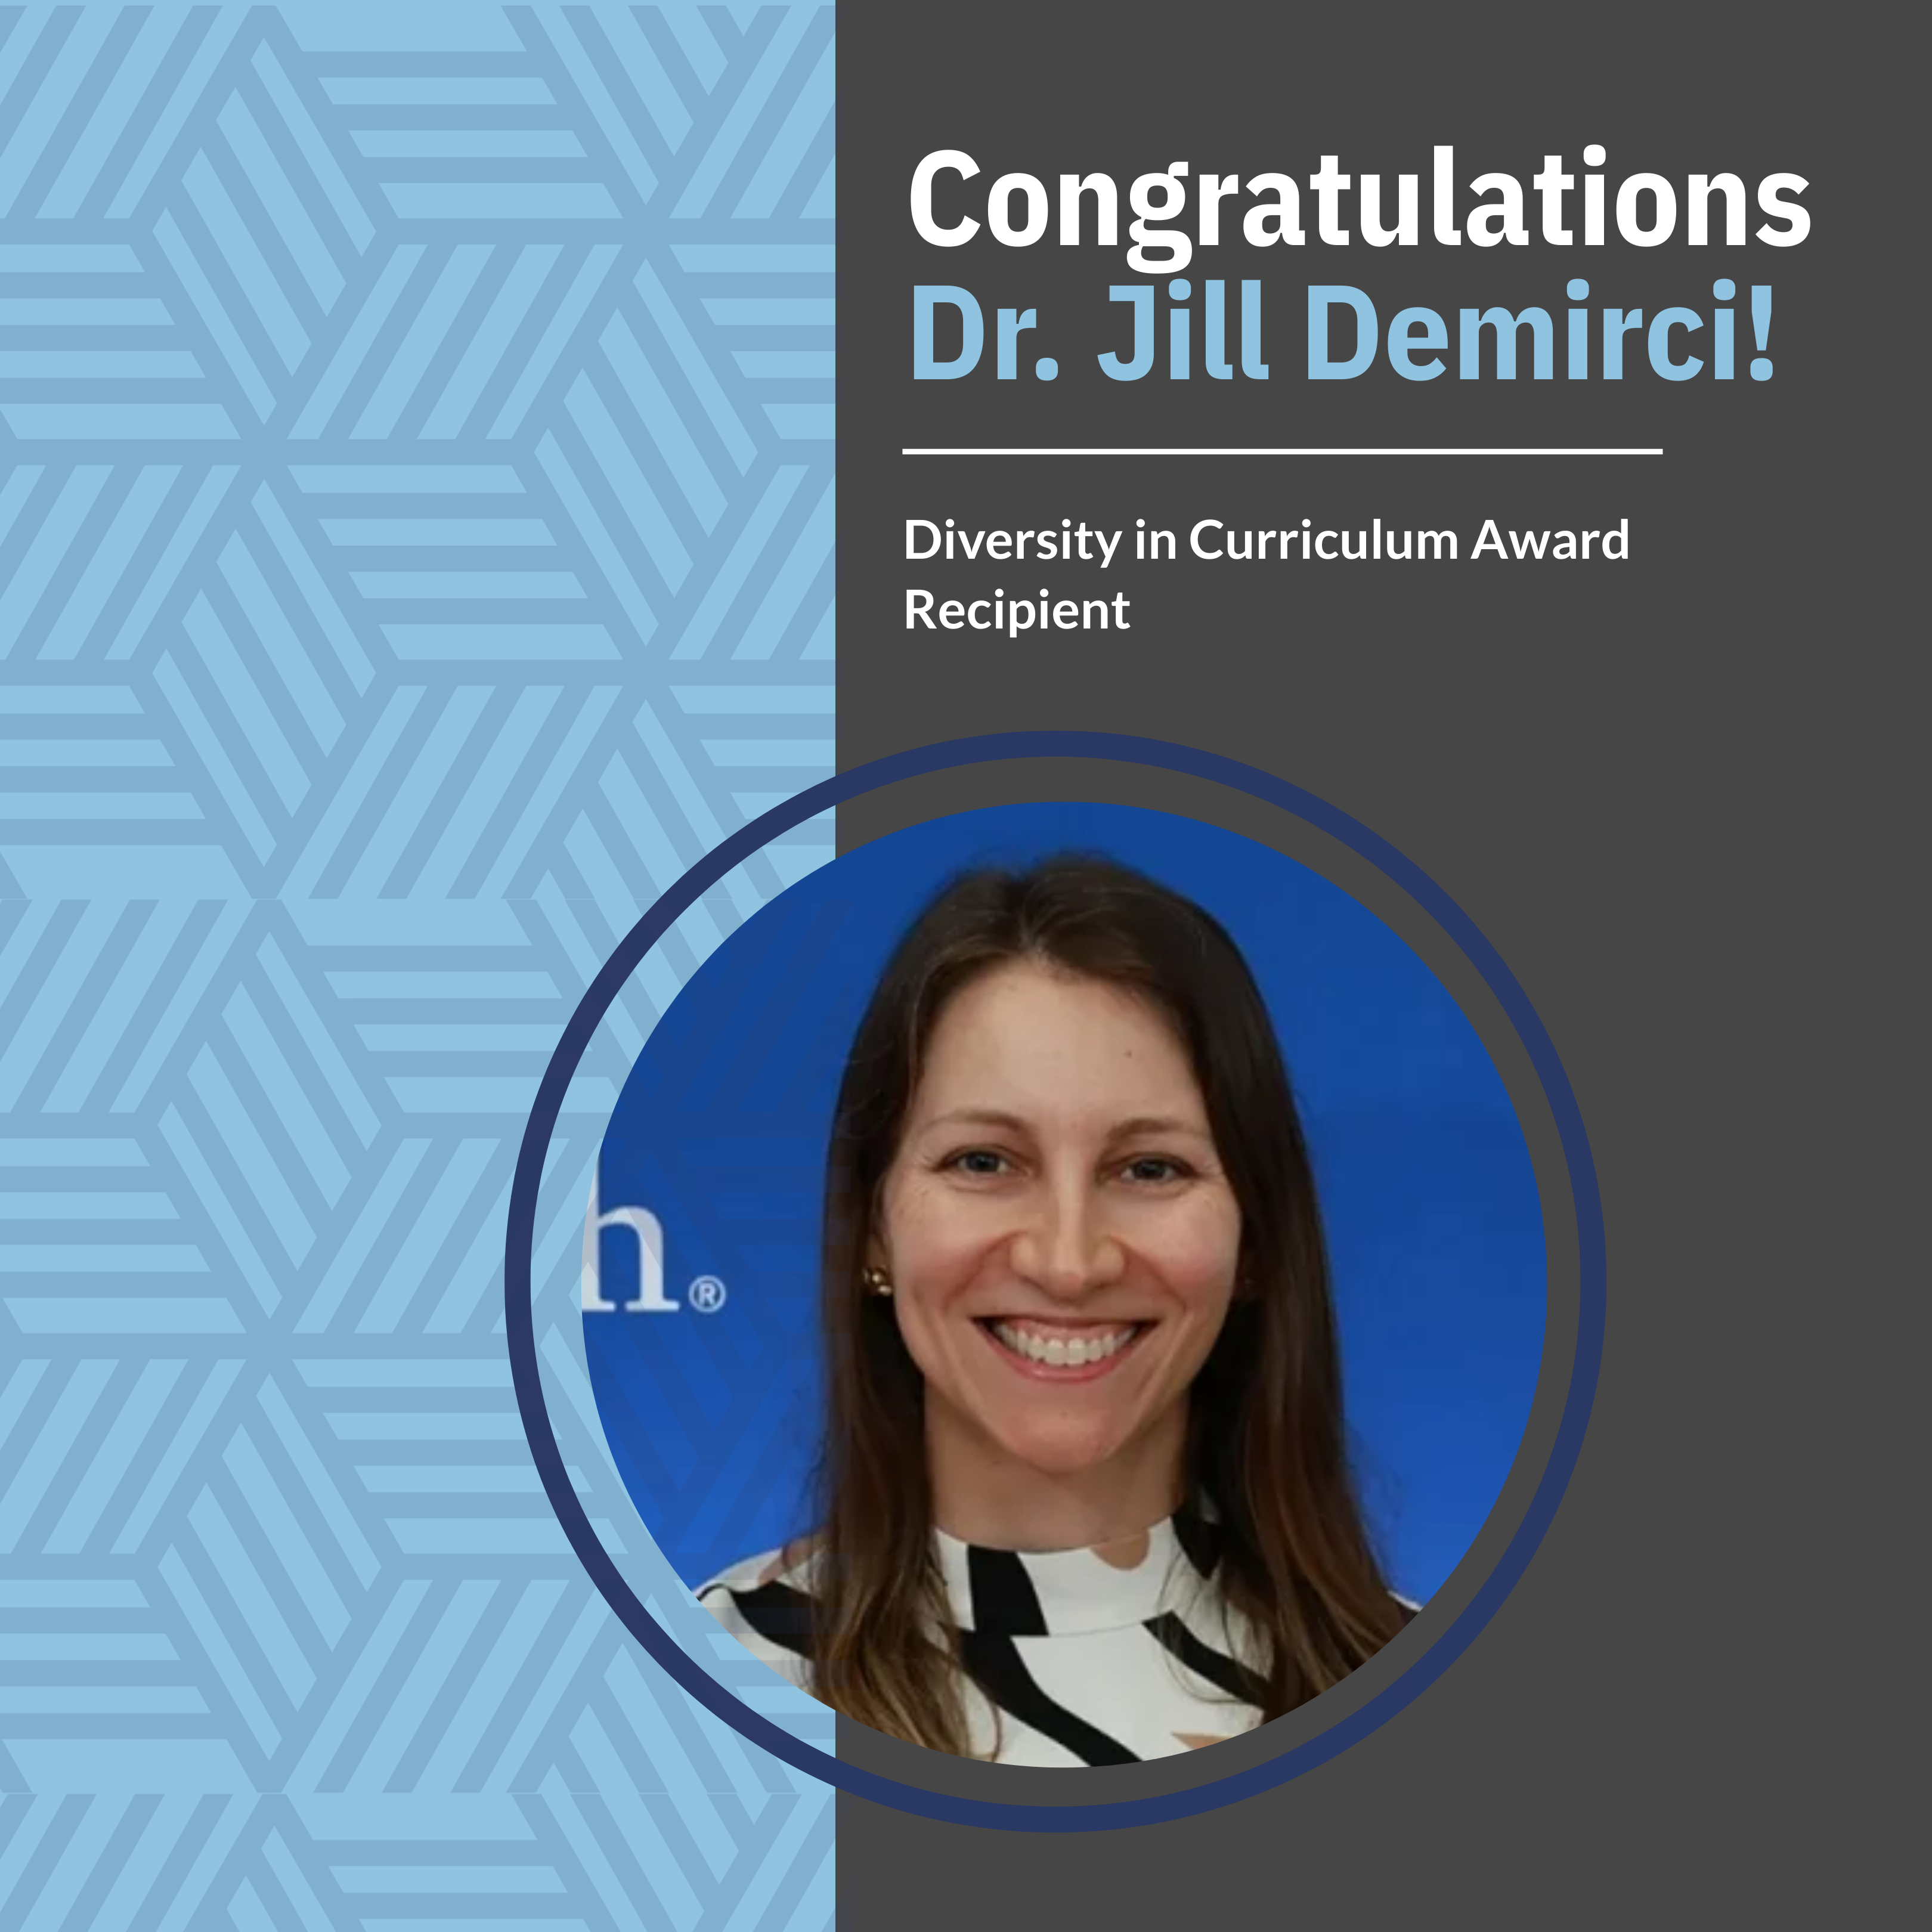 Dr. Jill Demirci Receives the Diversity in Curriculum Award